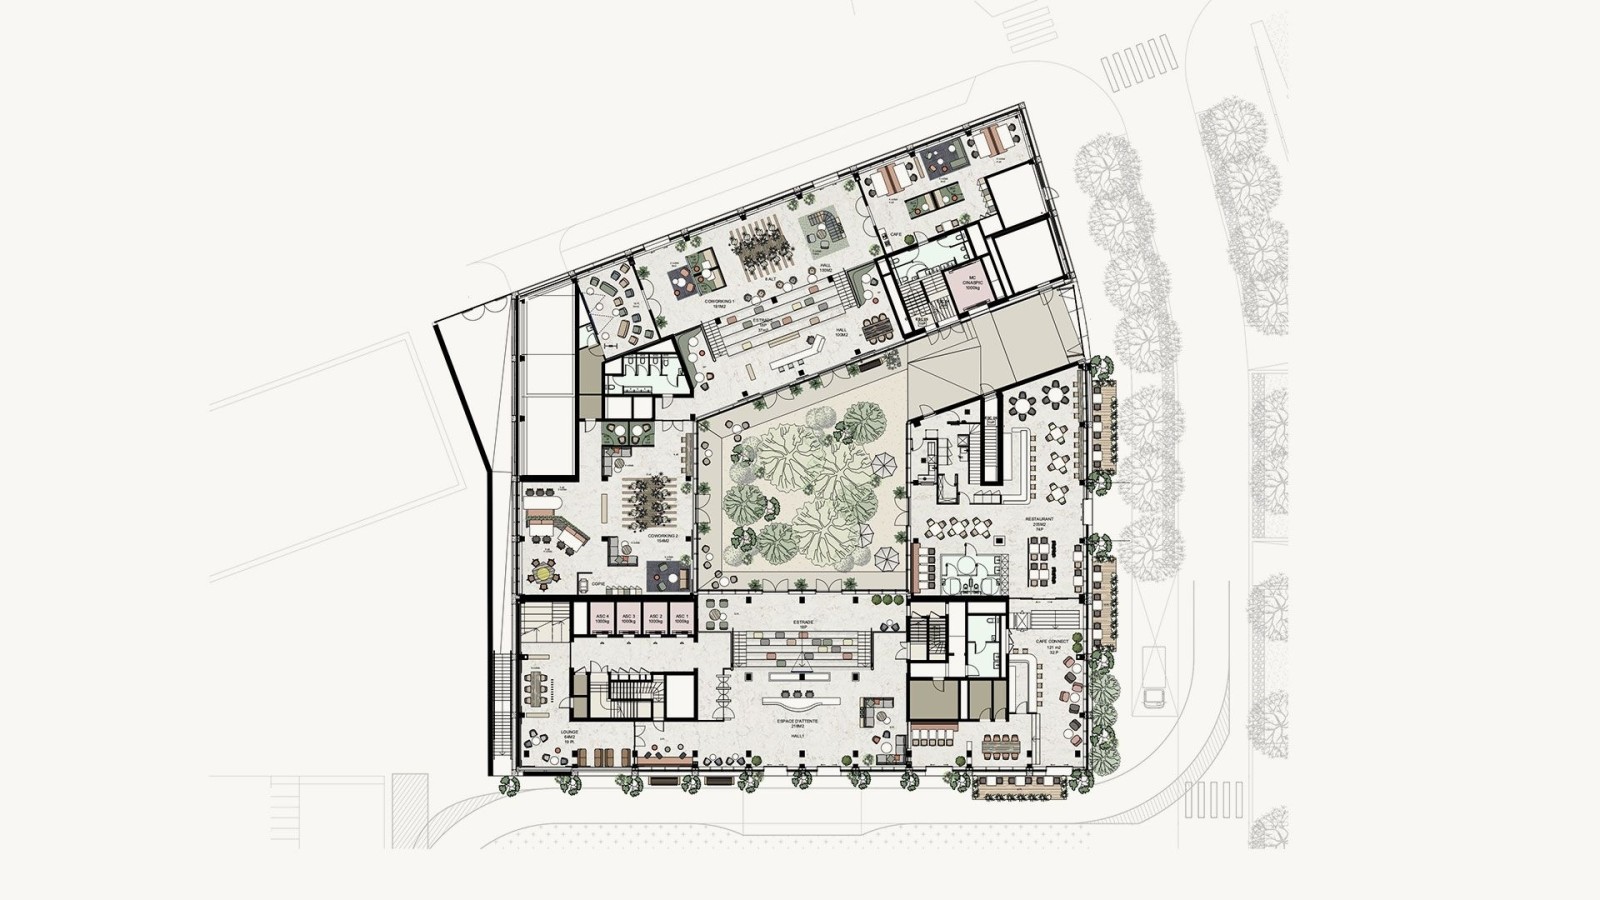 Messager - Ground floor space planning